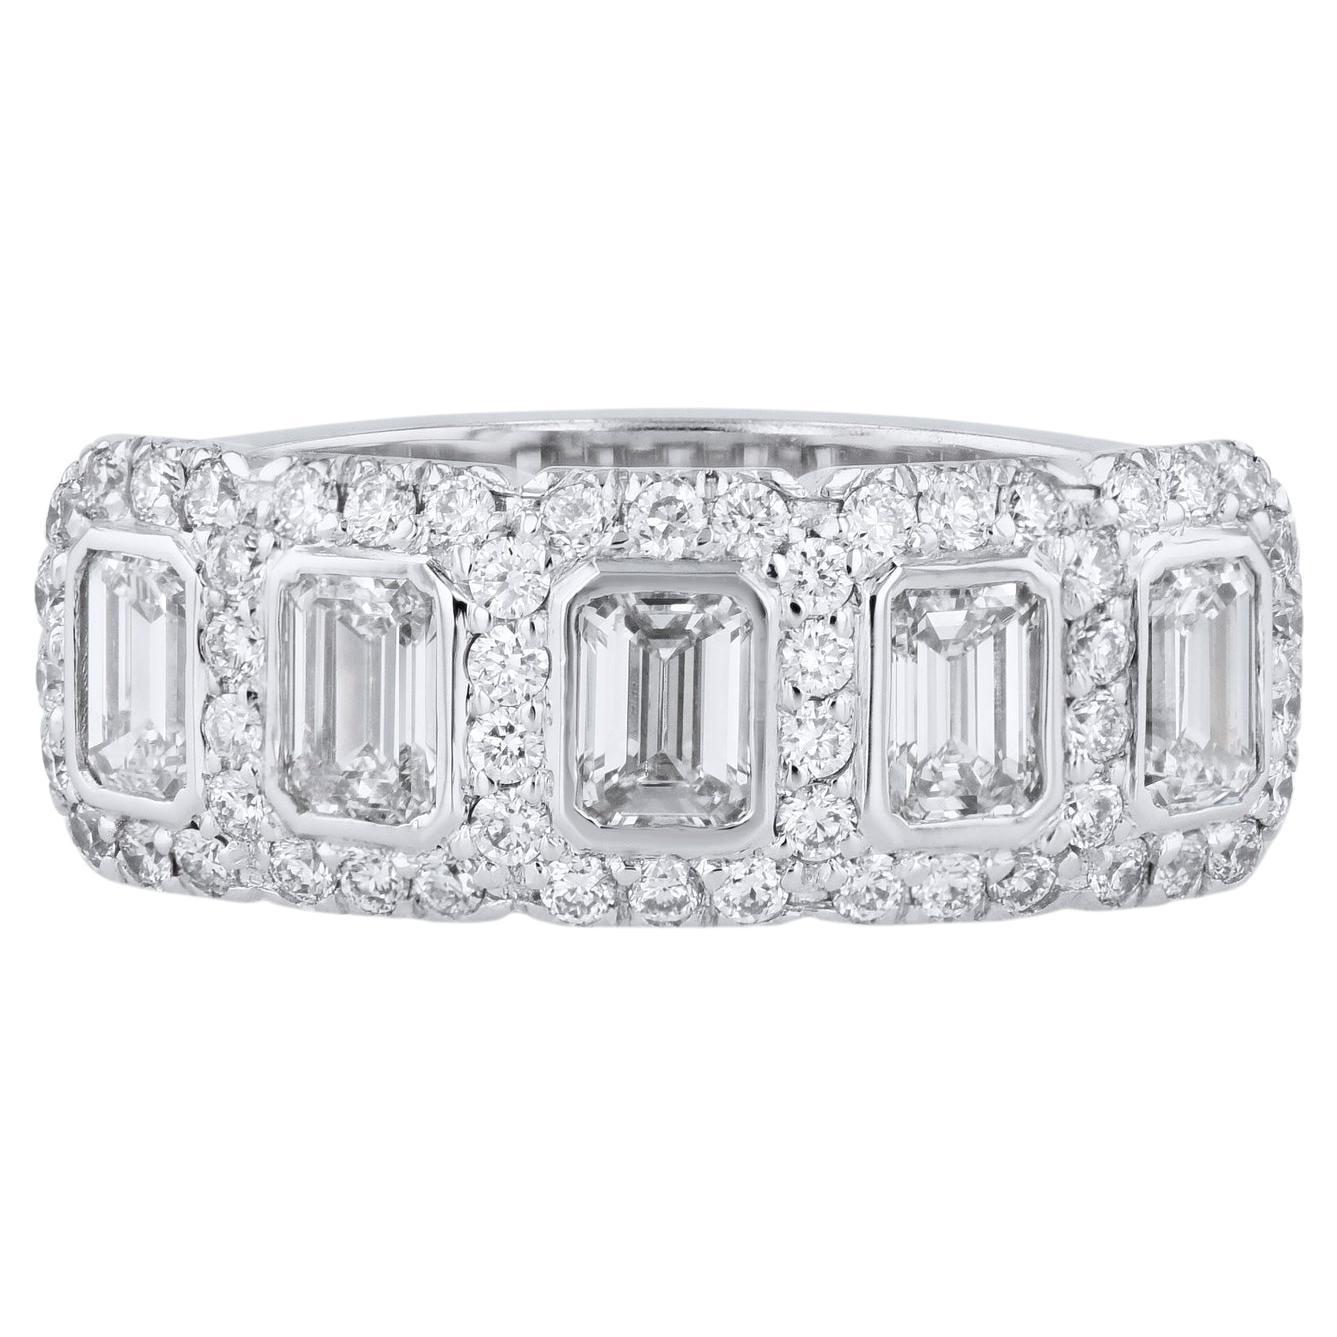 5 Emerald Cut Diamonds and Pave Platinum Anniversary Ring